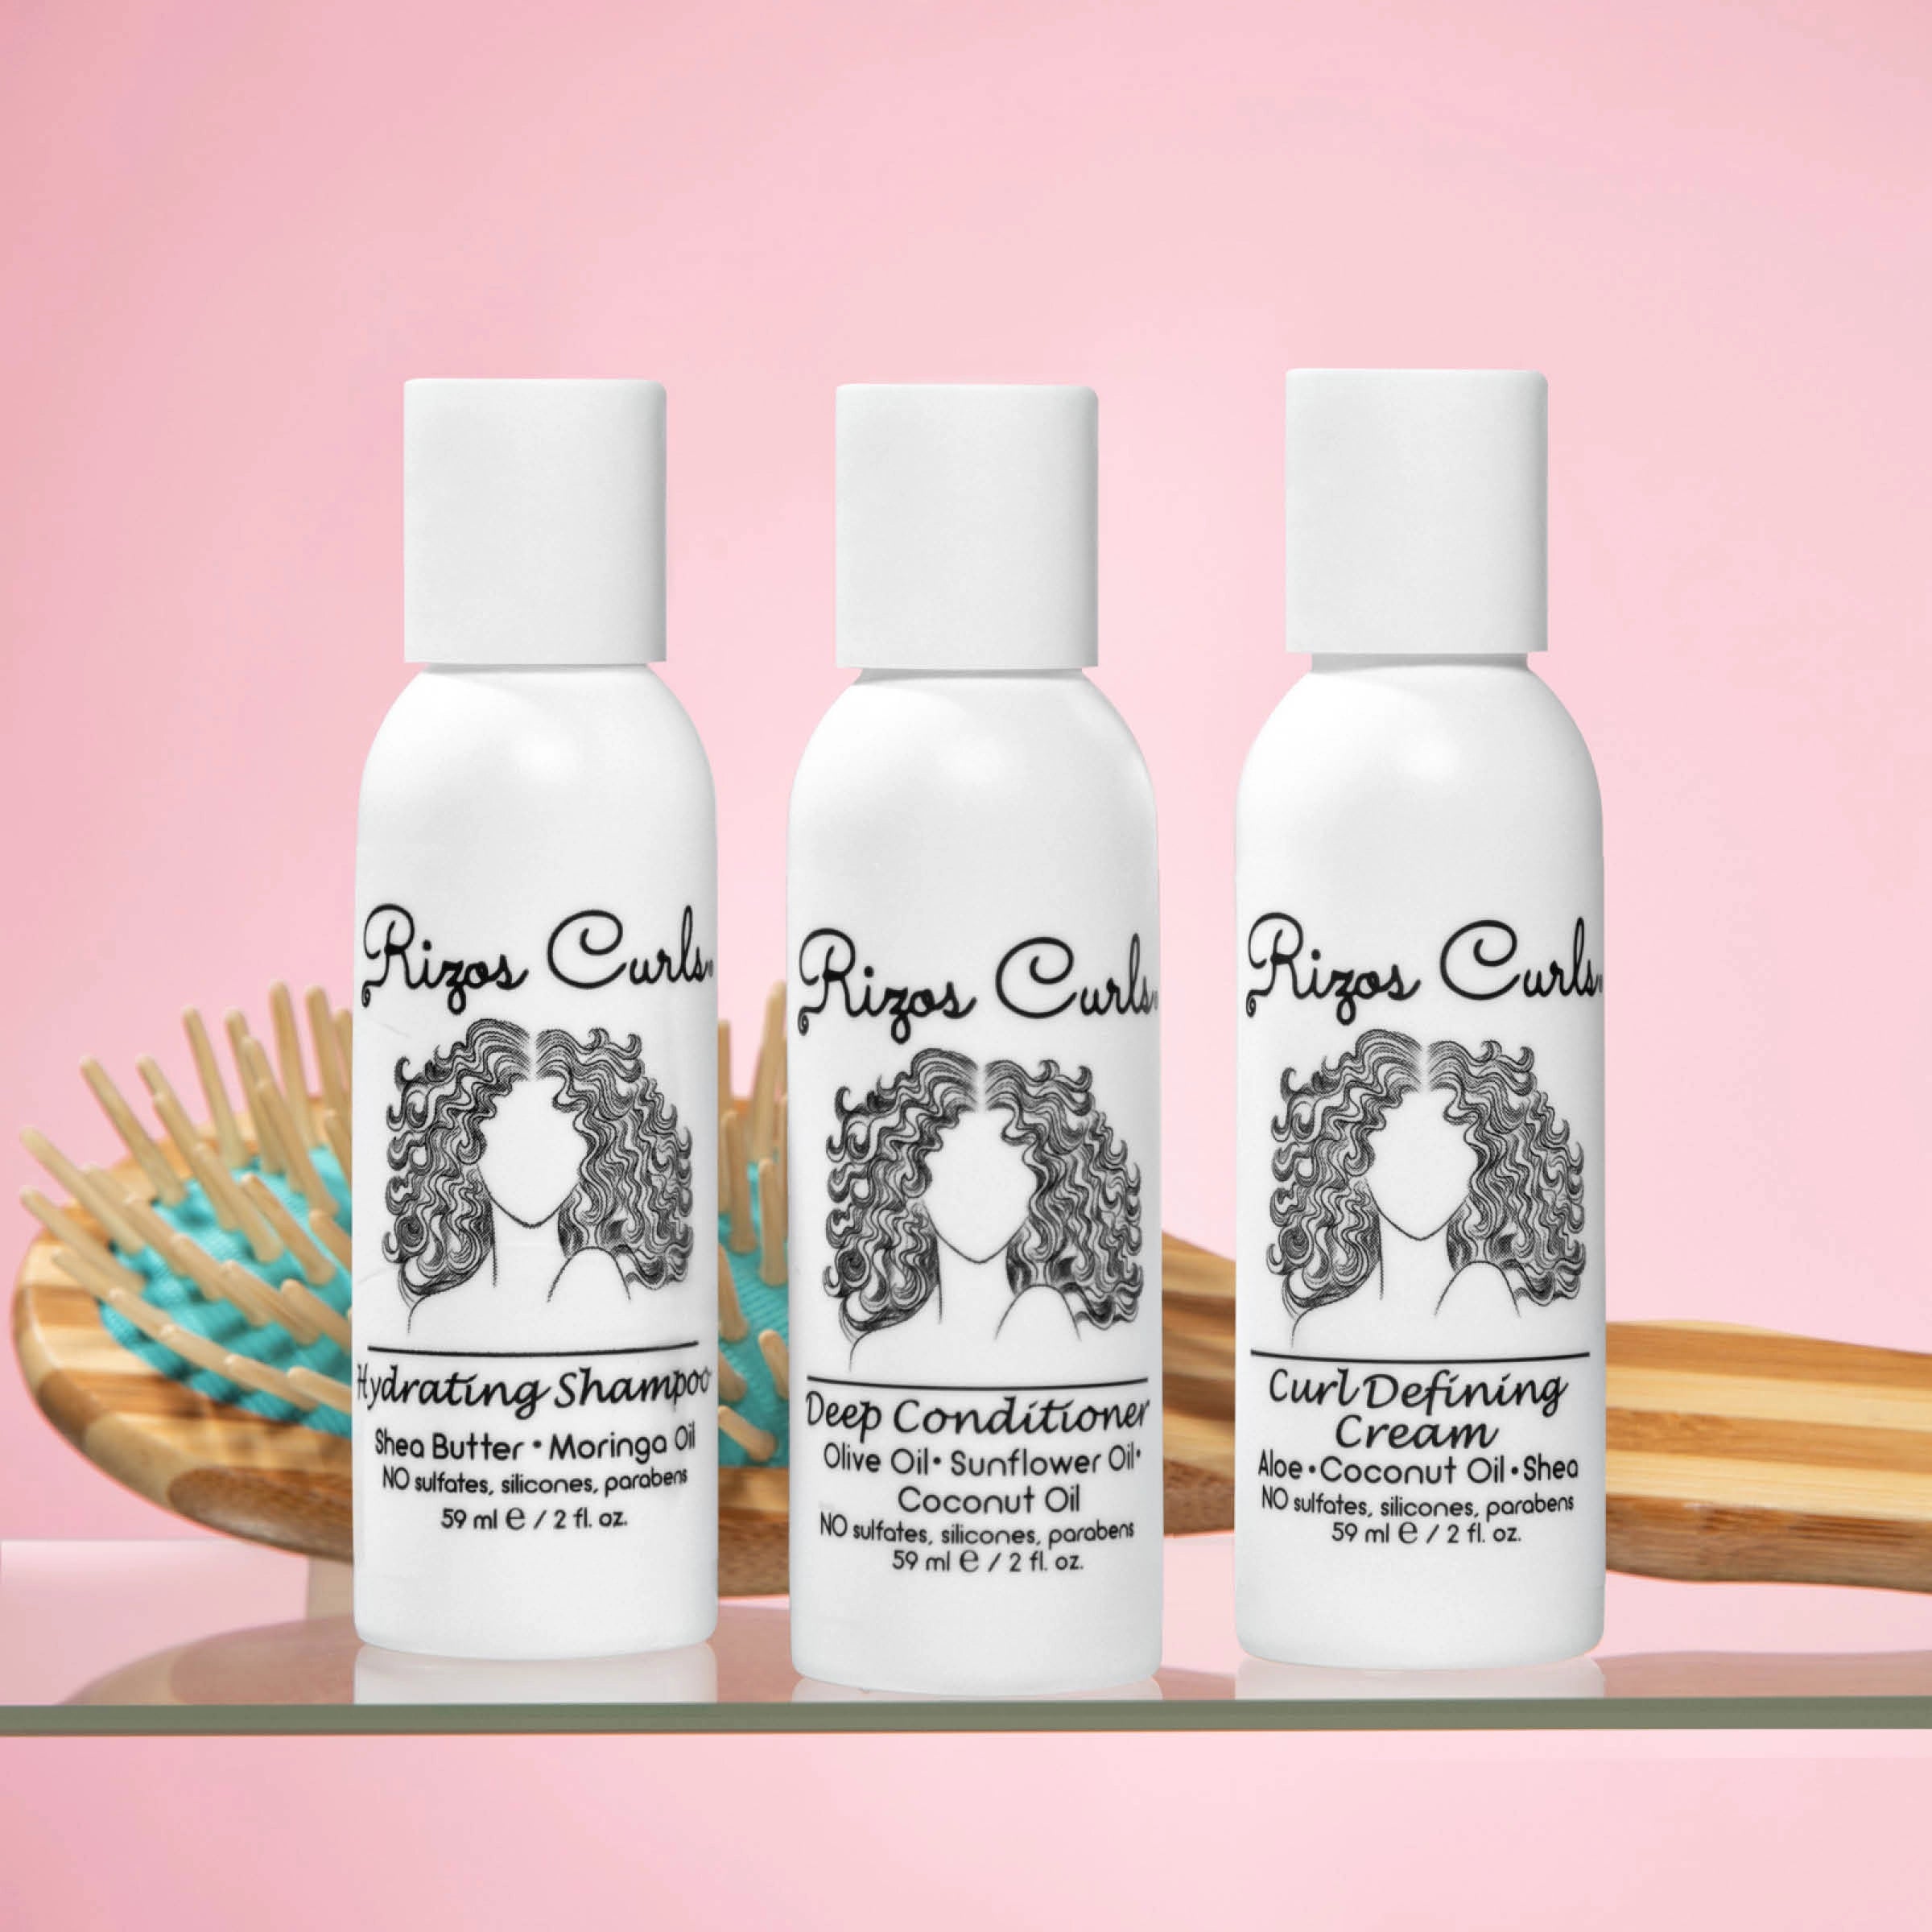 Rizos Curls Travel Kit Trio: Curl Defining Cream, Shampoo, Conditioner